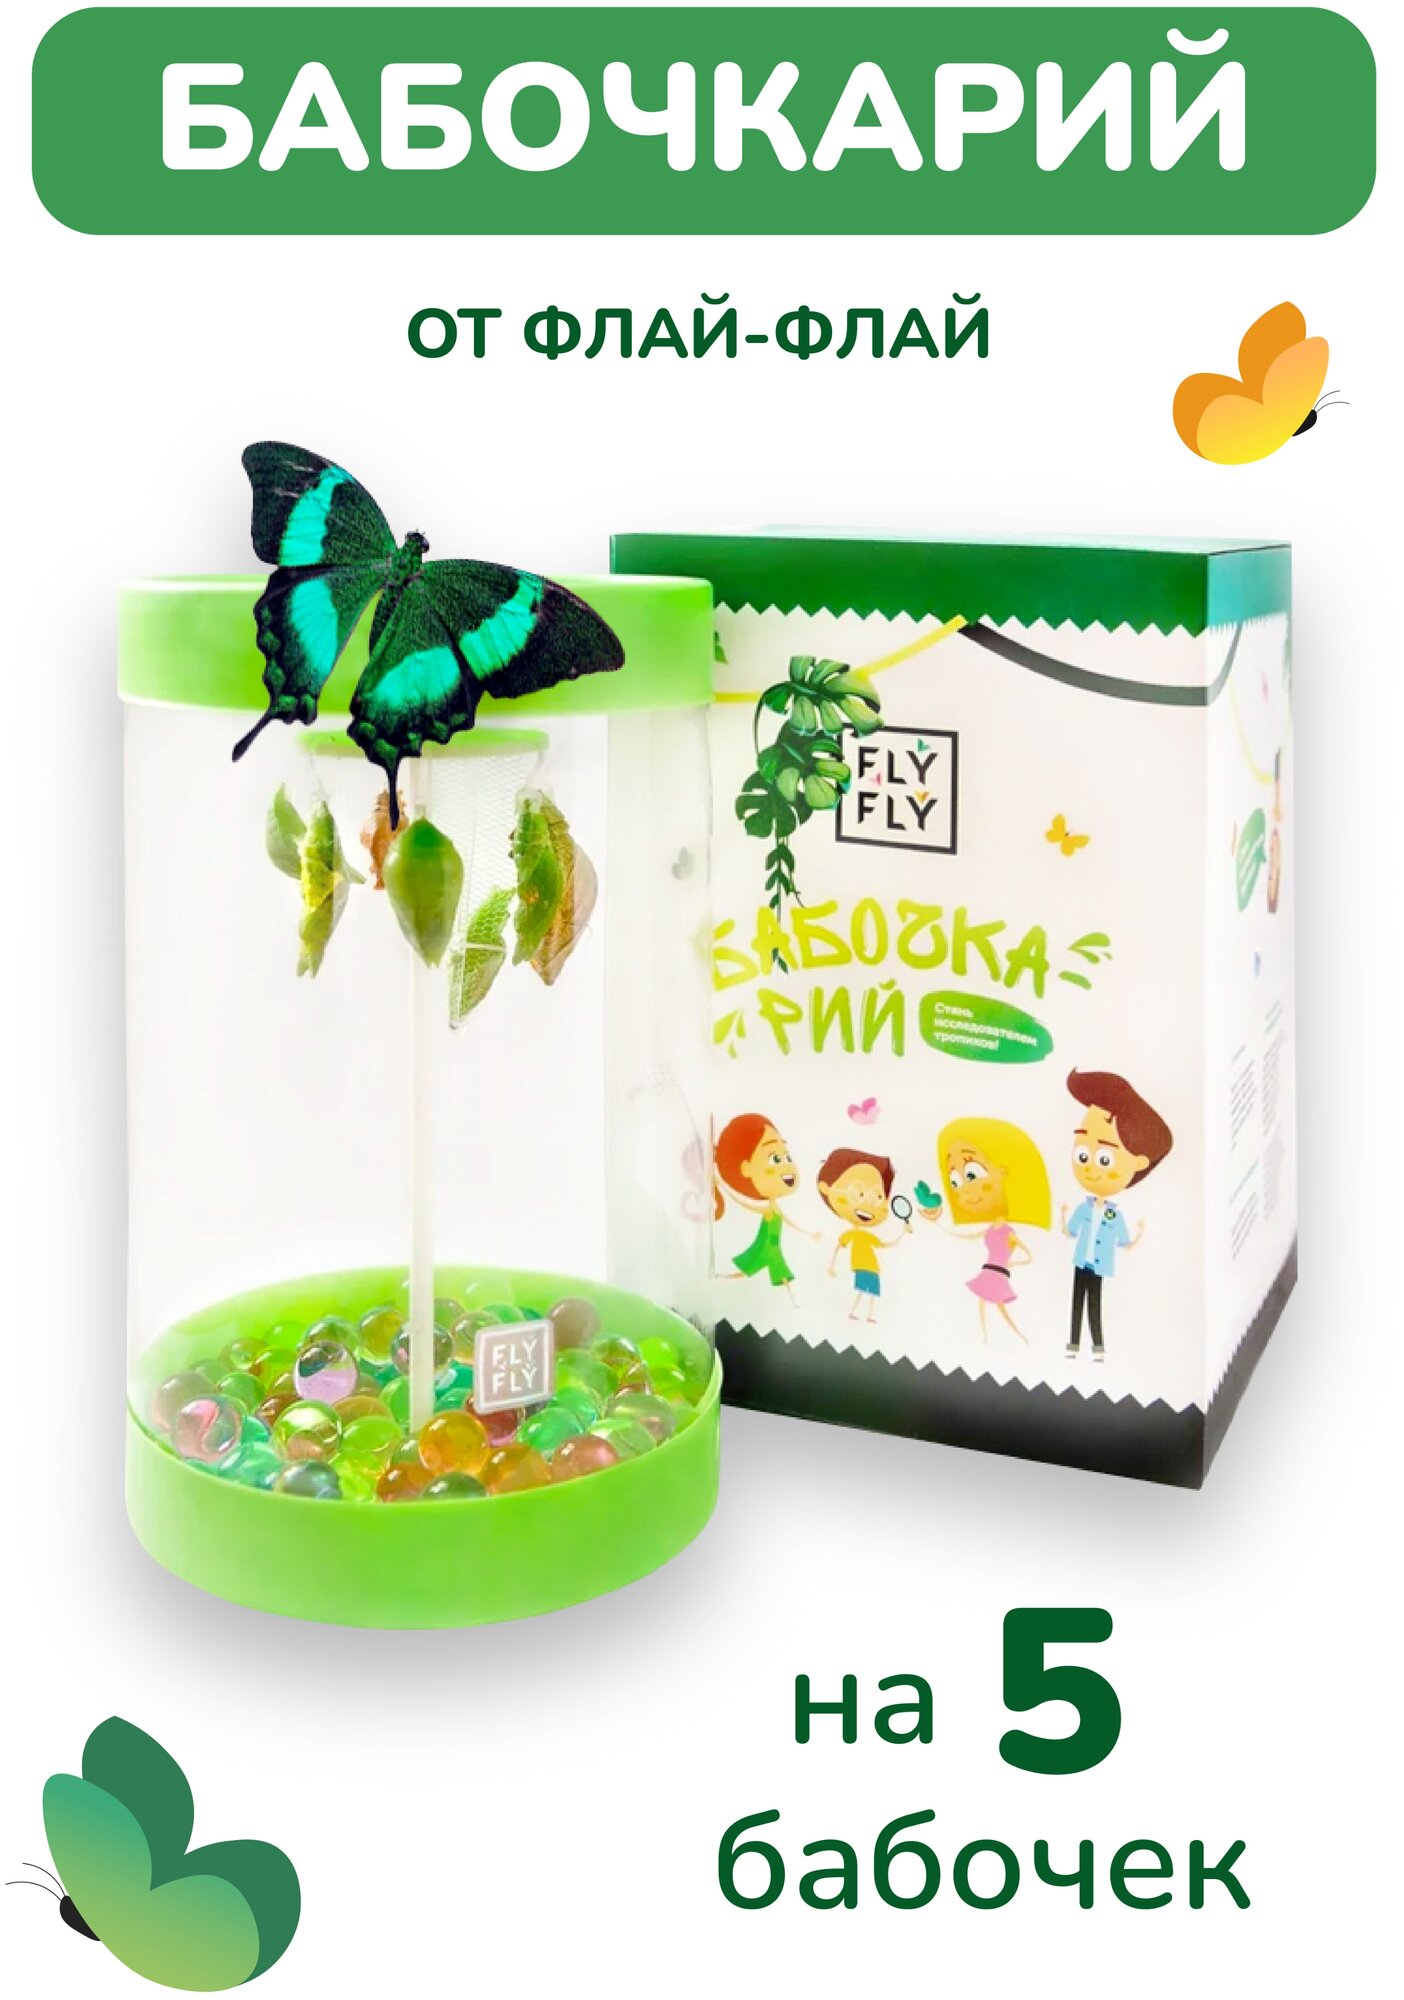 Ферма бабочек "Бабочкарий" на 5 куколок / Детский развивающий набор для исследований от Флай-Флай - фотография № 1